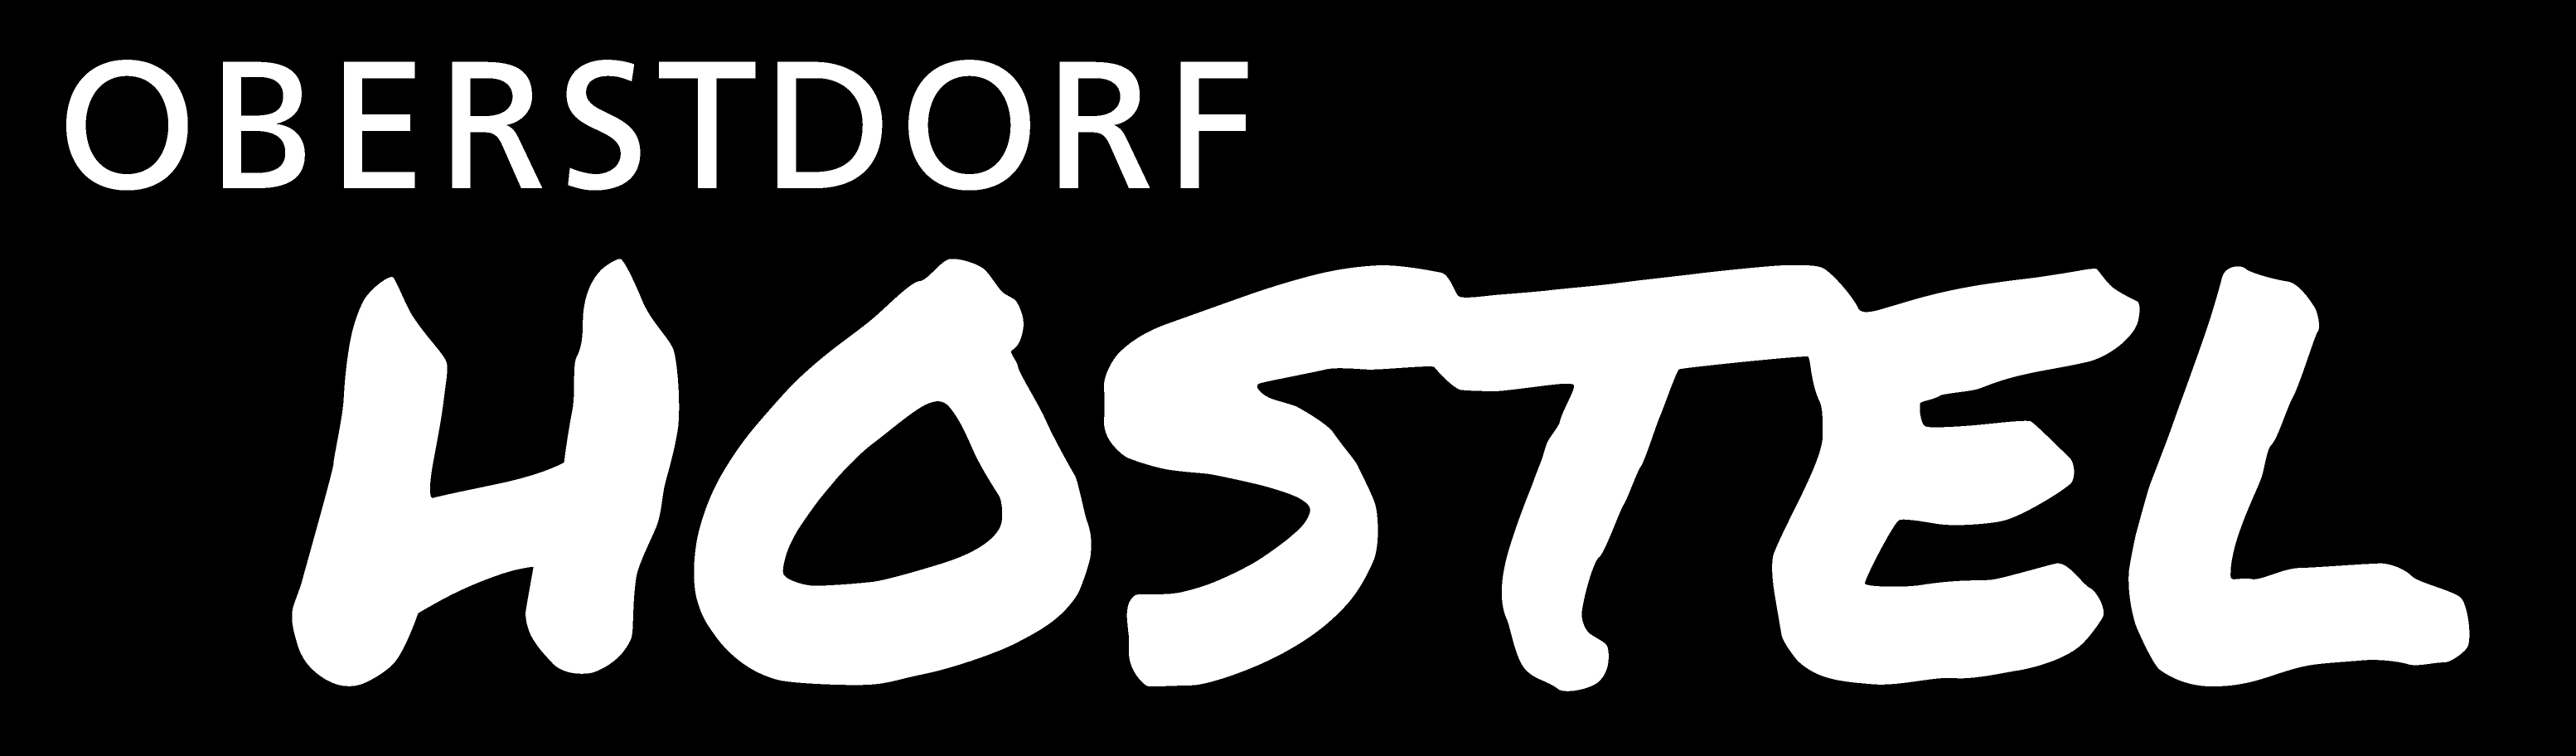 Oberstdorf-Hostel-logo-neg